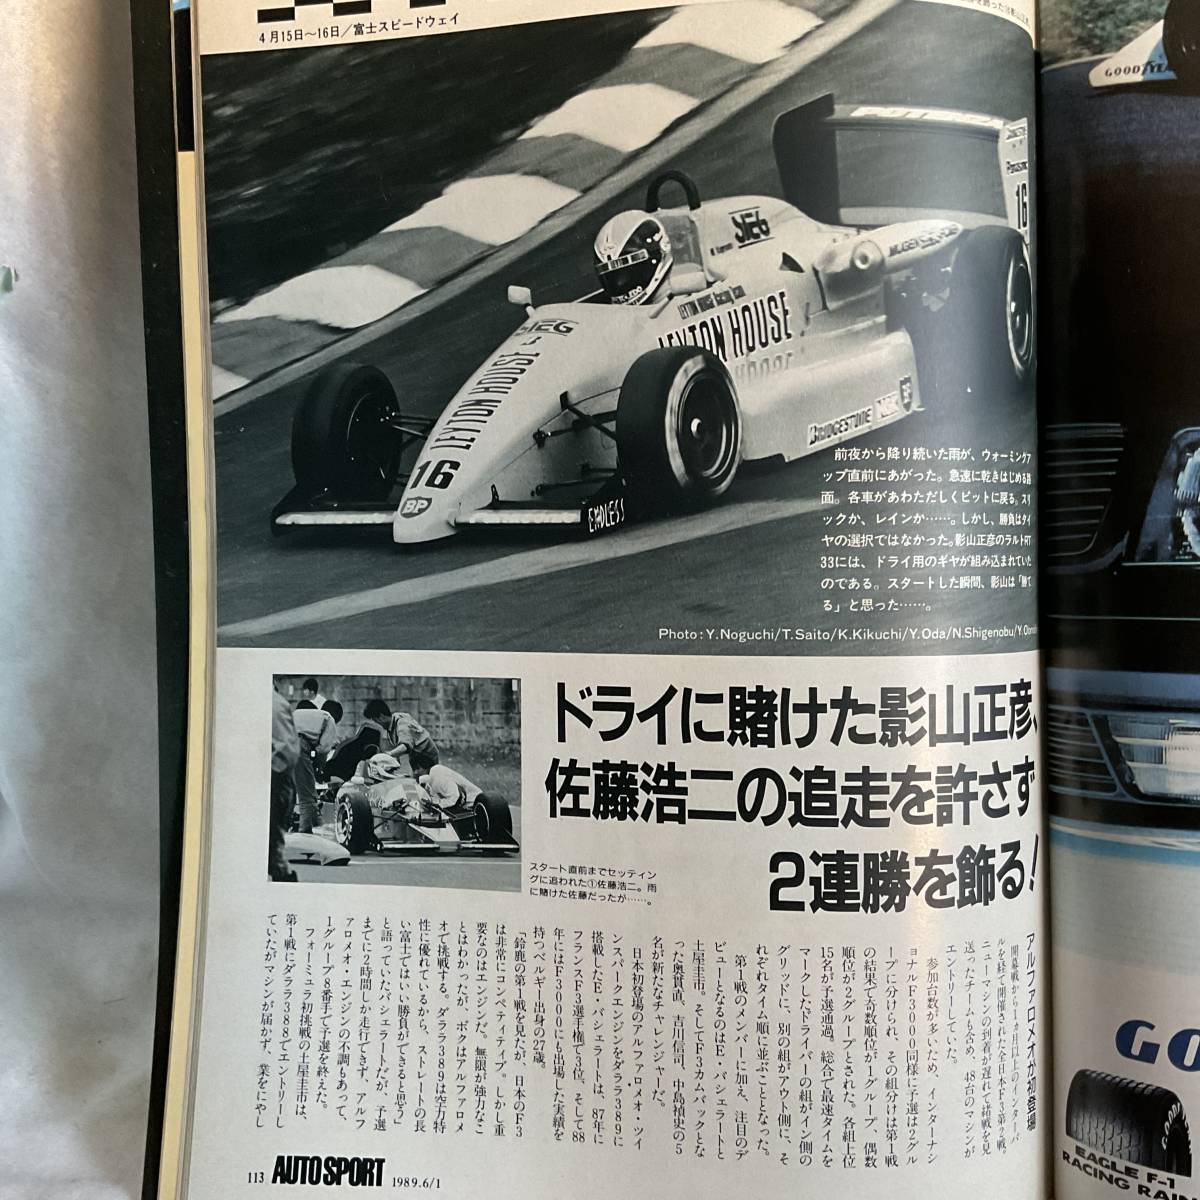 q，オートスポーツ1989年6/1日号、WSPC鈴鹿/WSPC図鑑、F-3000Rd2富士他、_画像8